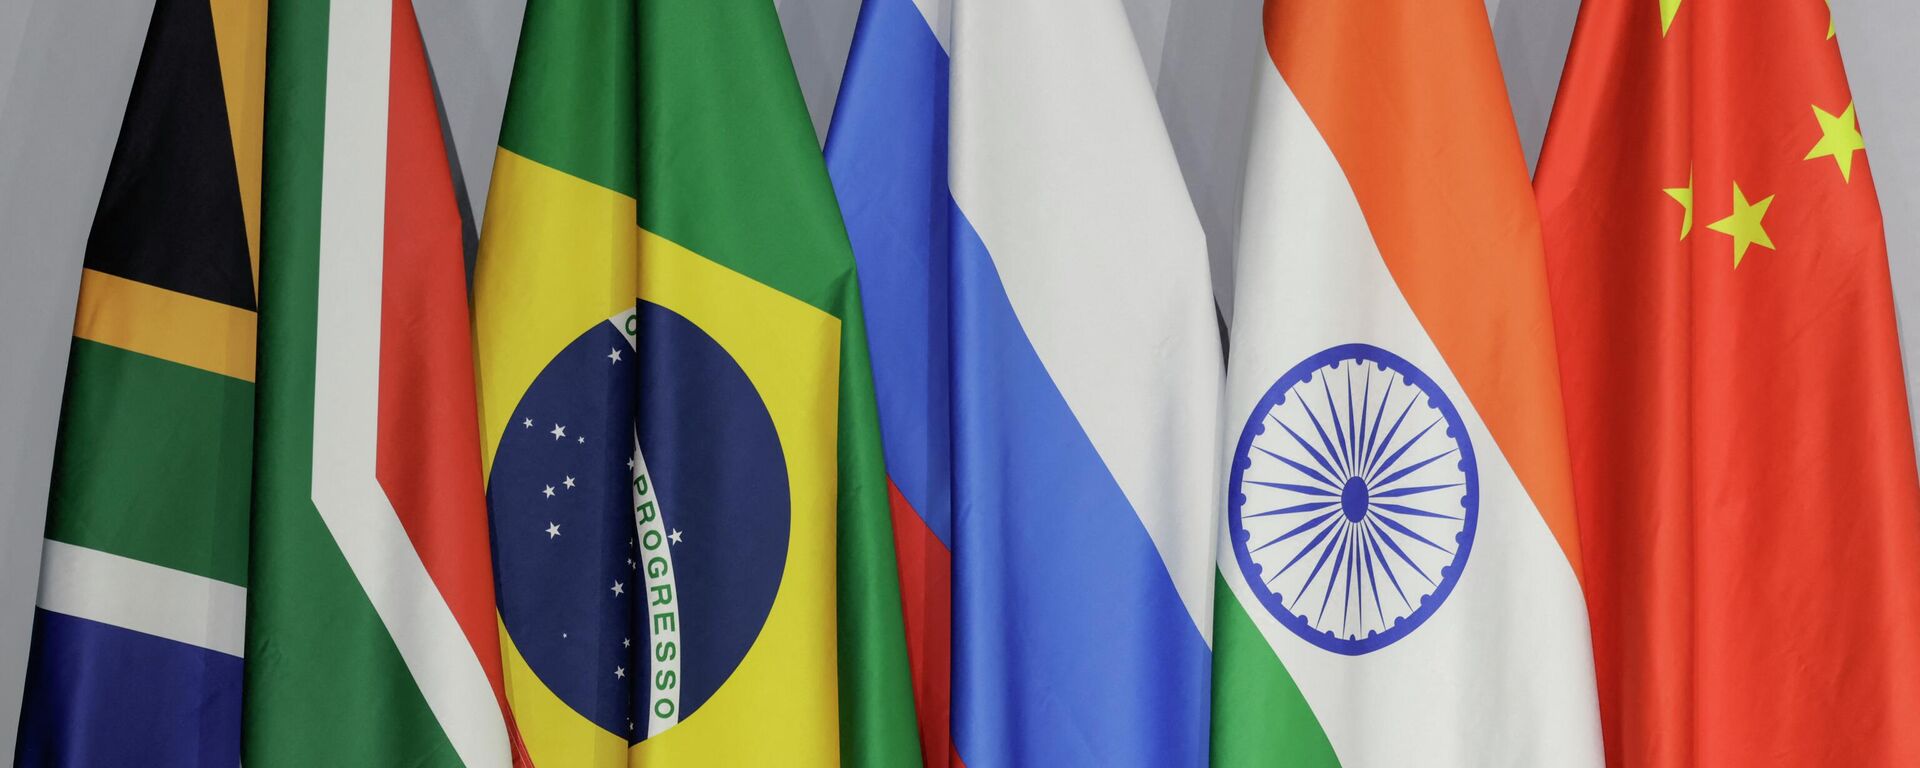 La cumbre de los BRICS se realizó del 22 al 24 de agosto en Sudáfrica - Sputnik Mundo, 1920, 25.08.2023